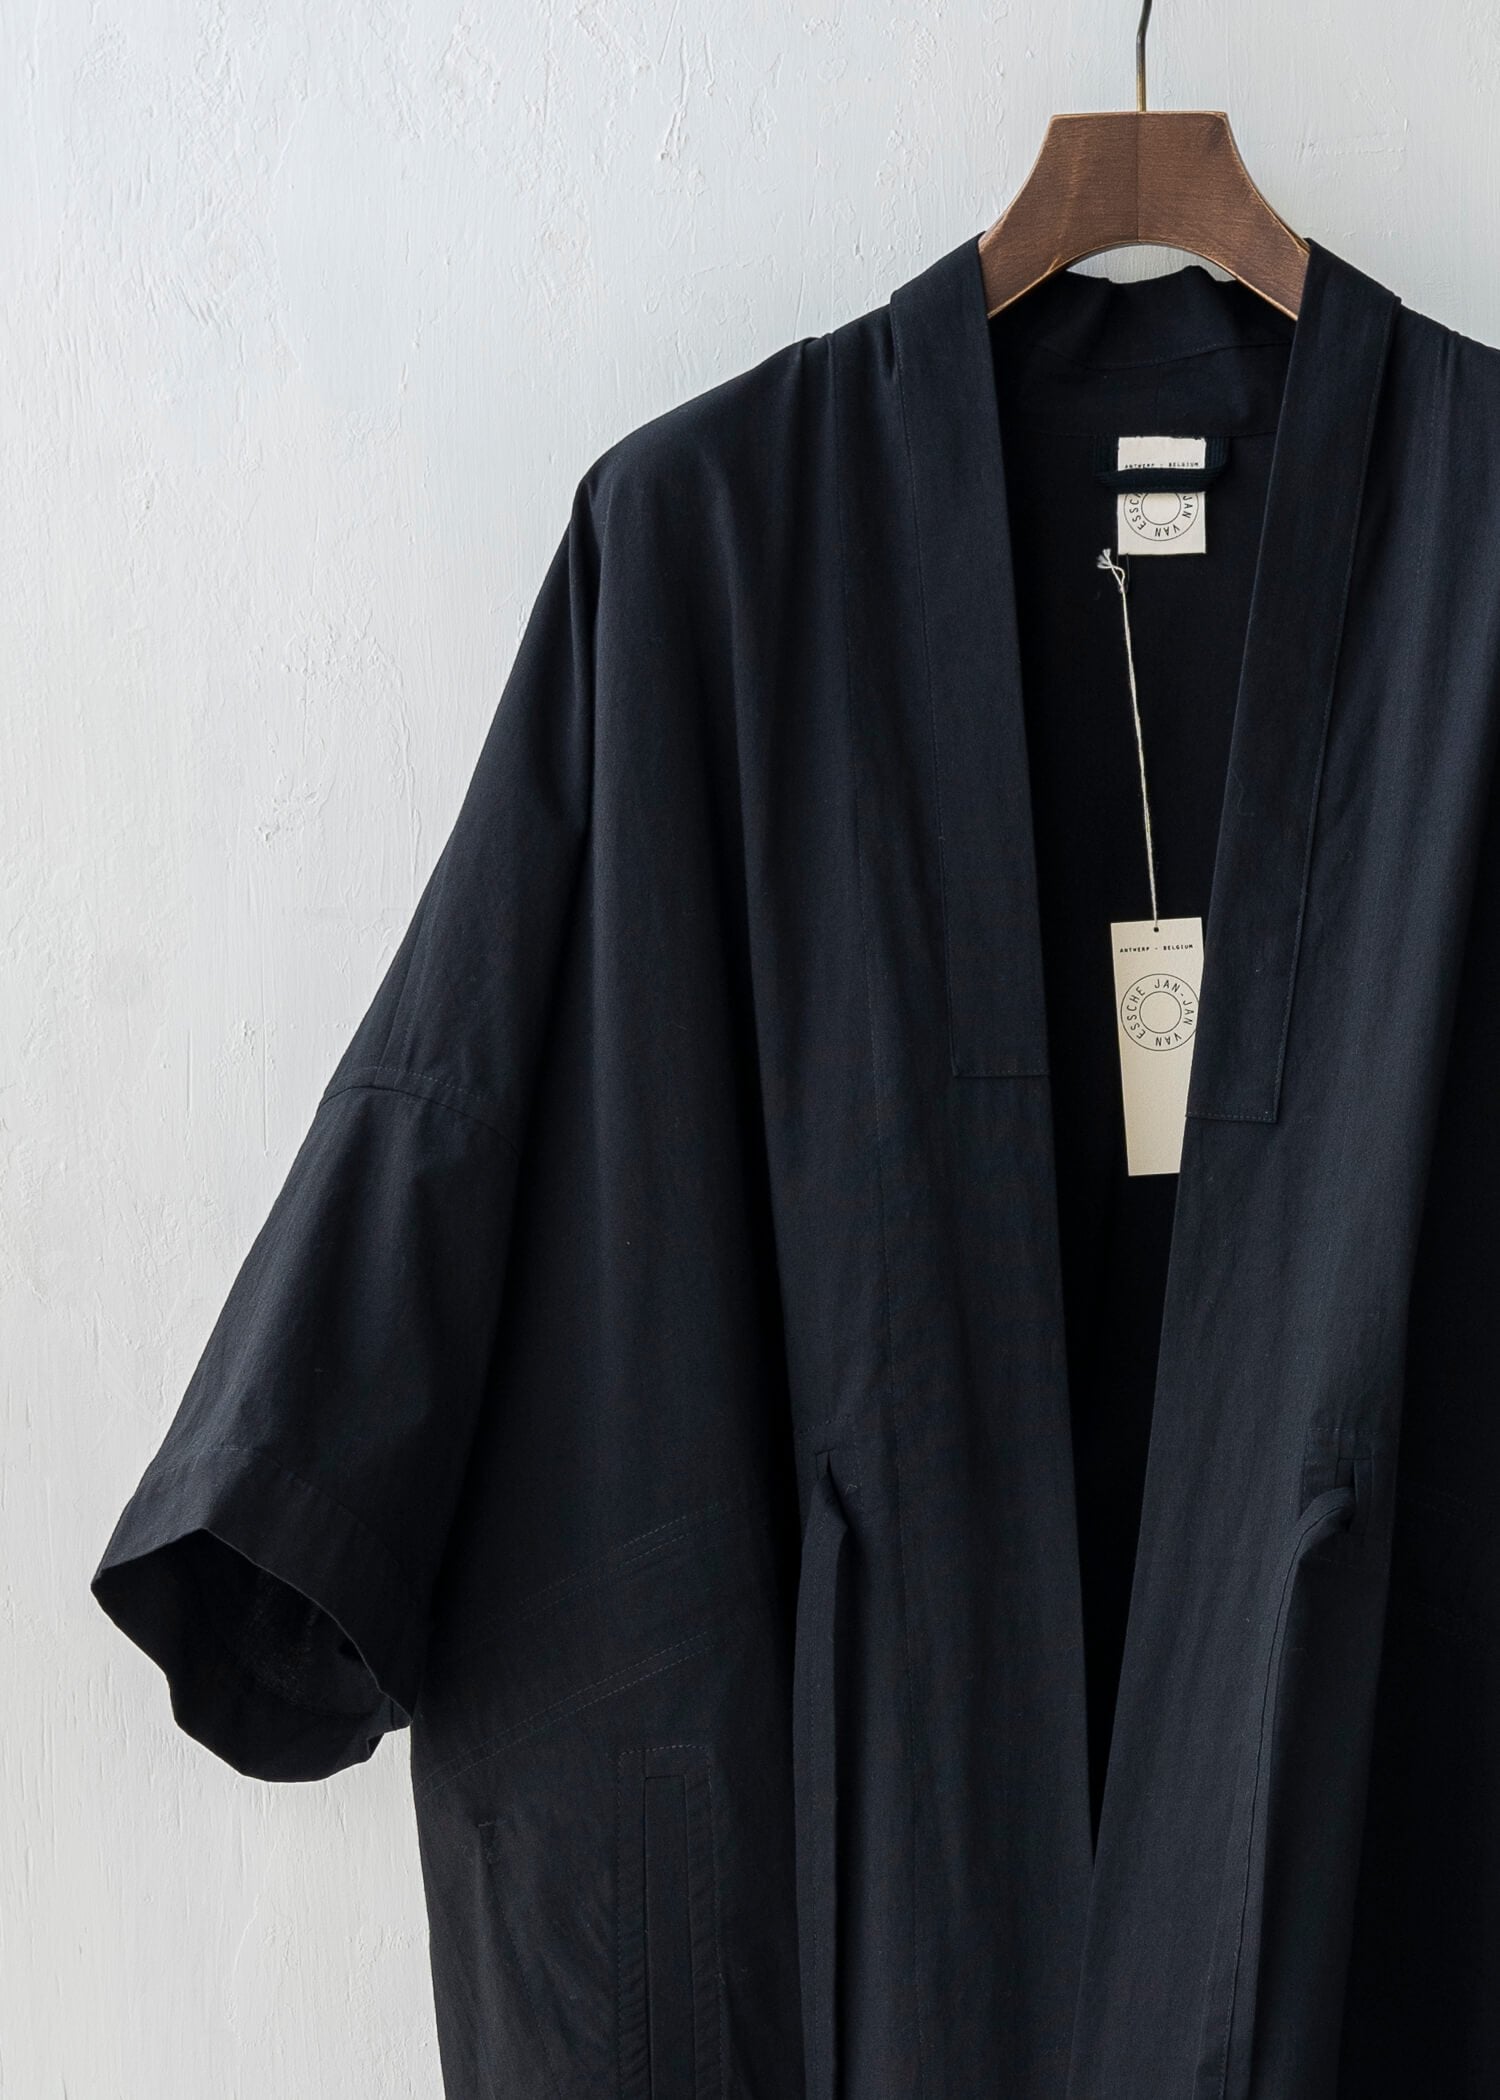 JAN-JAN VAN ESSCHE / "KIMONO#6" 和服夏季大衣 / 黑色 / 棱纹衬衫